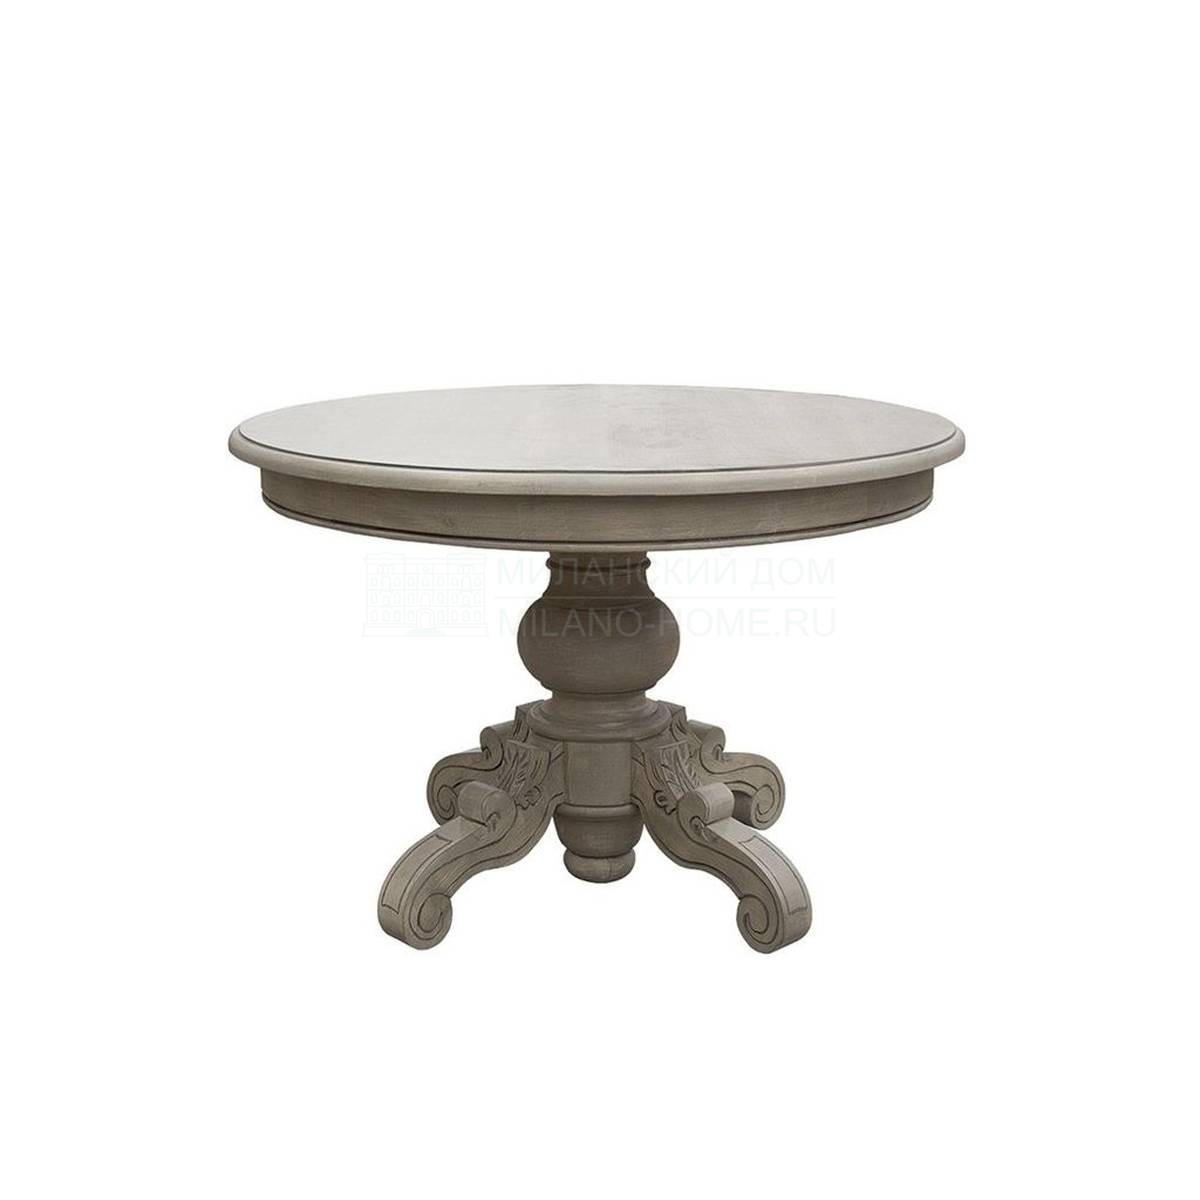 Круглый стол M-1044 round dining table из Испании фабрики GUADARTE